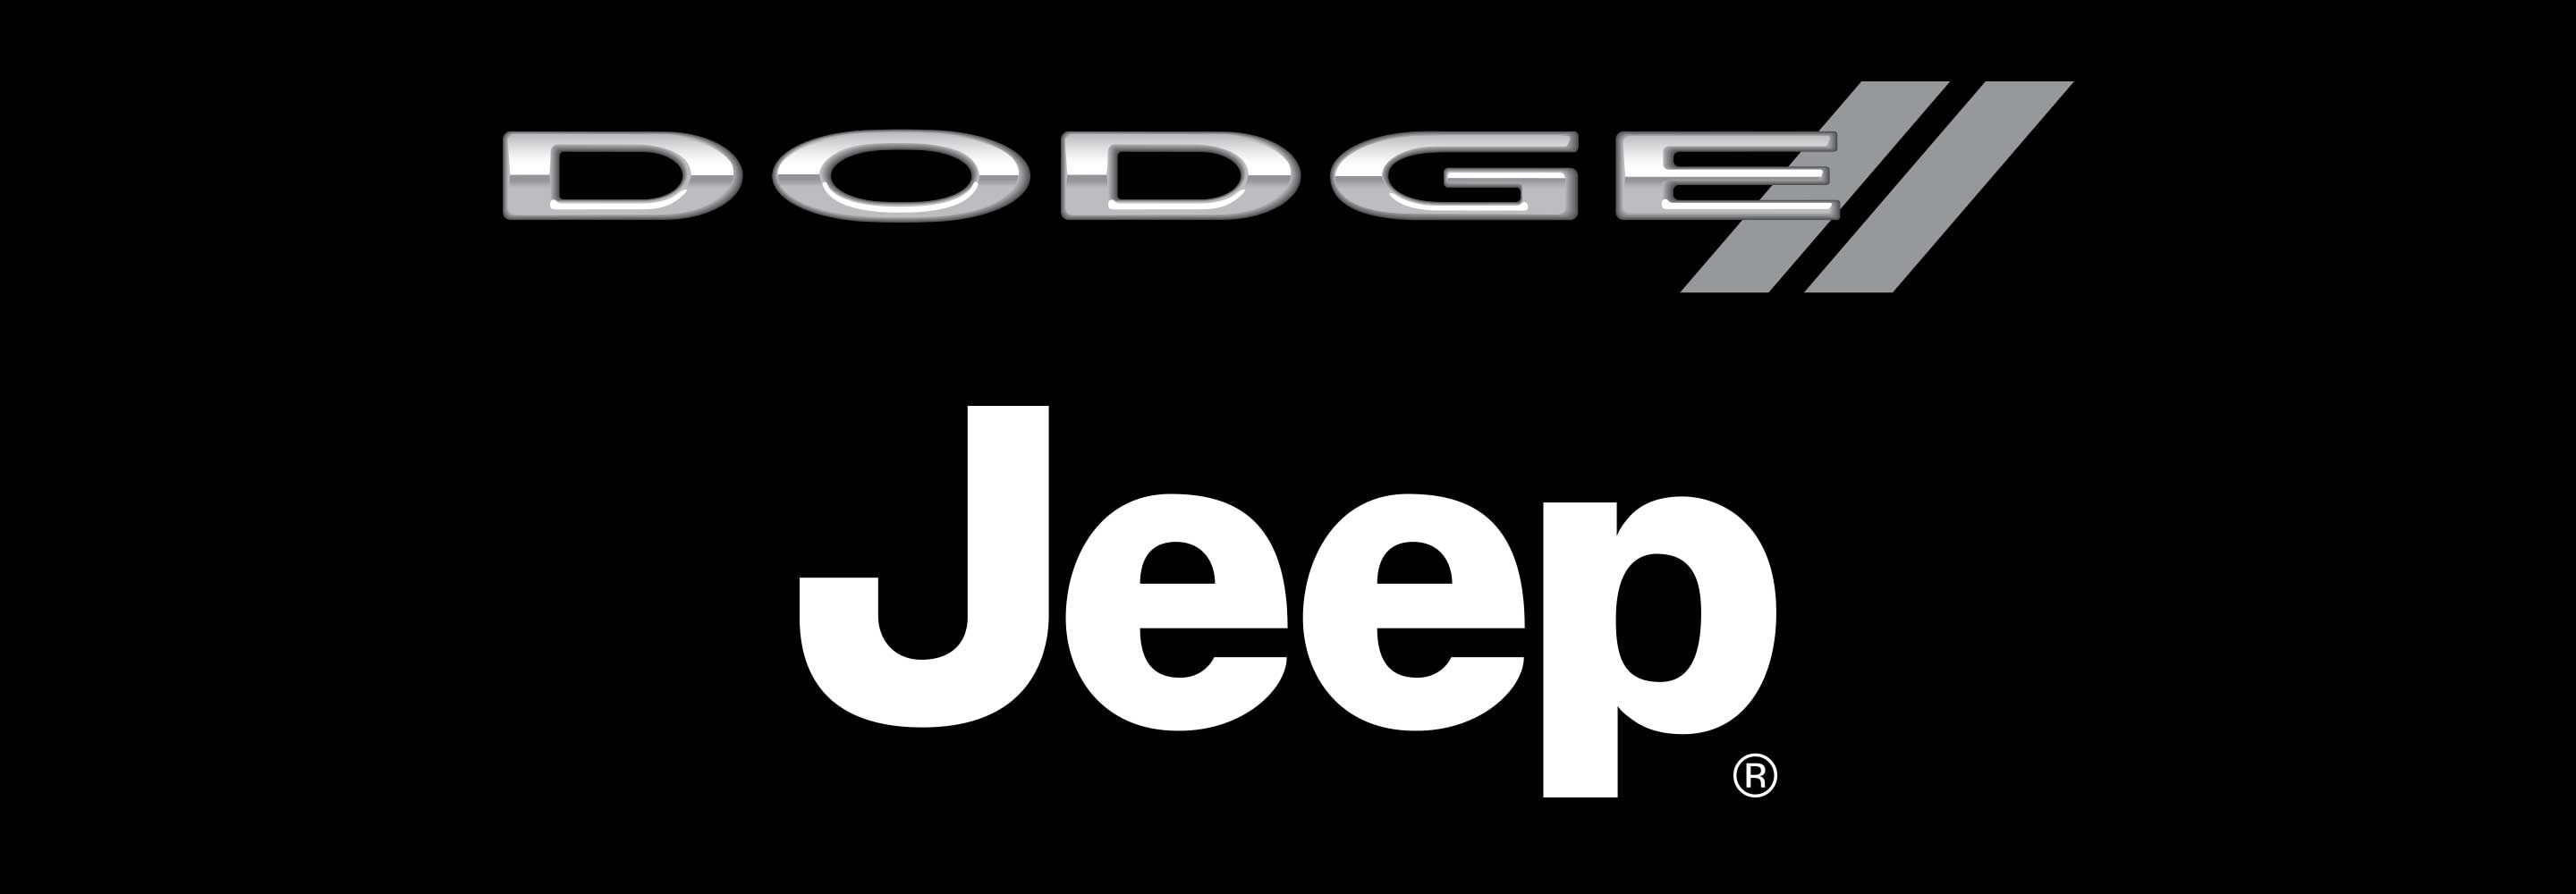 Vincentric Best Value: Dodge & Jeep®